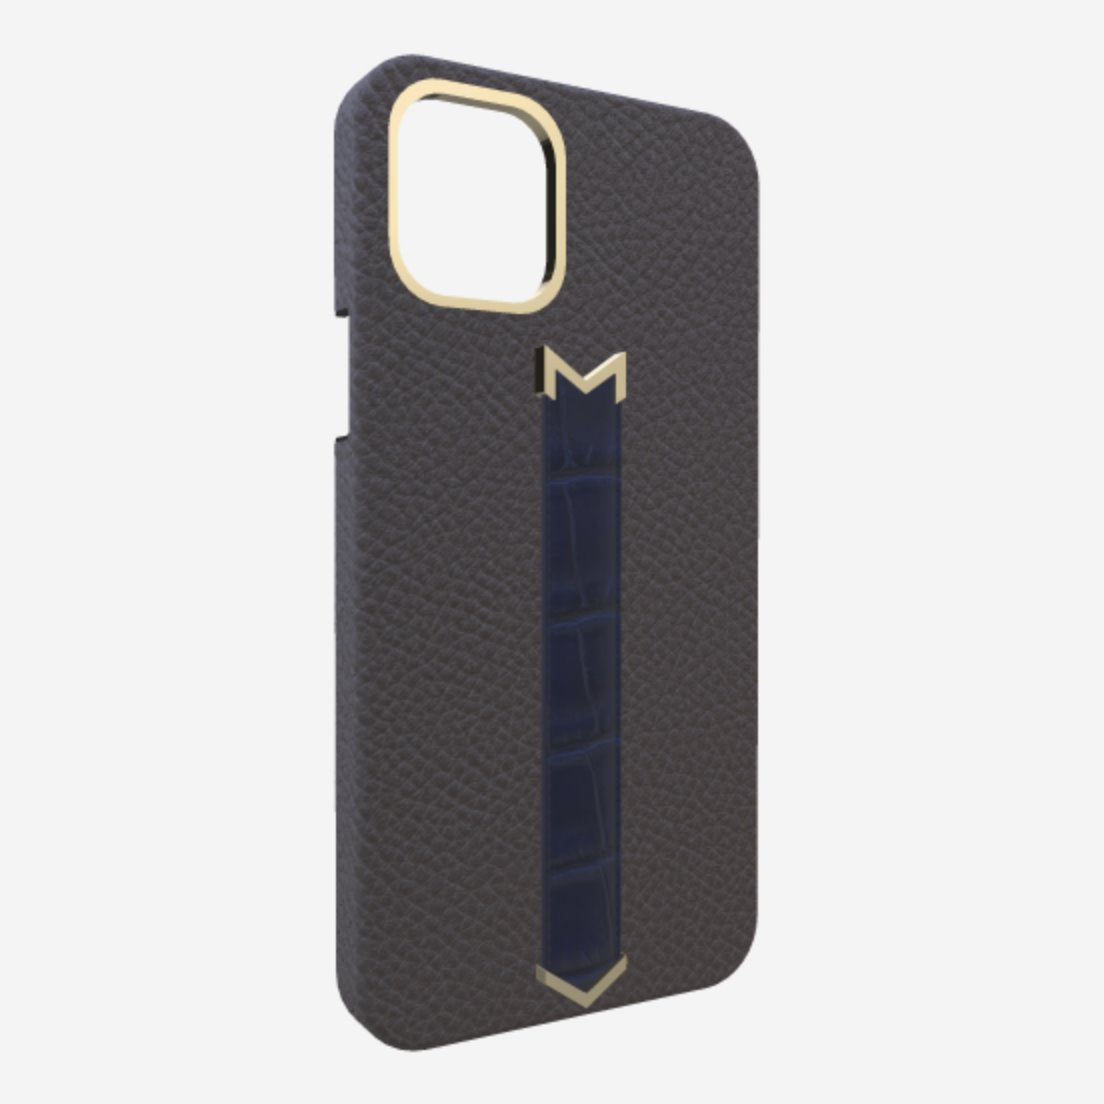 Gold Finger Strap Case for iPhone 13 Pro Max in Genuine Calfskin and Alligator Elite Grey Navy Blue 